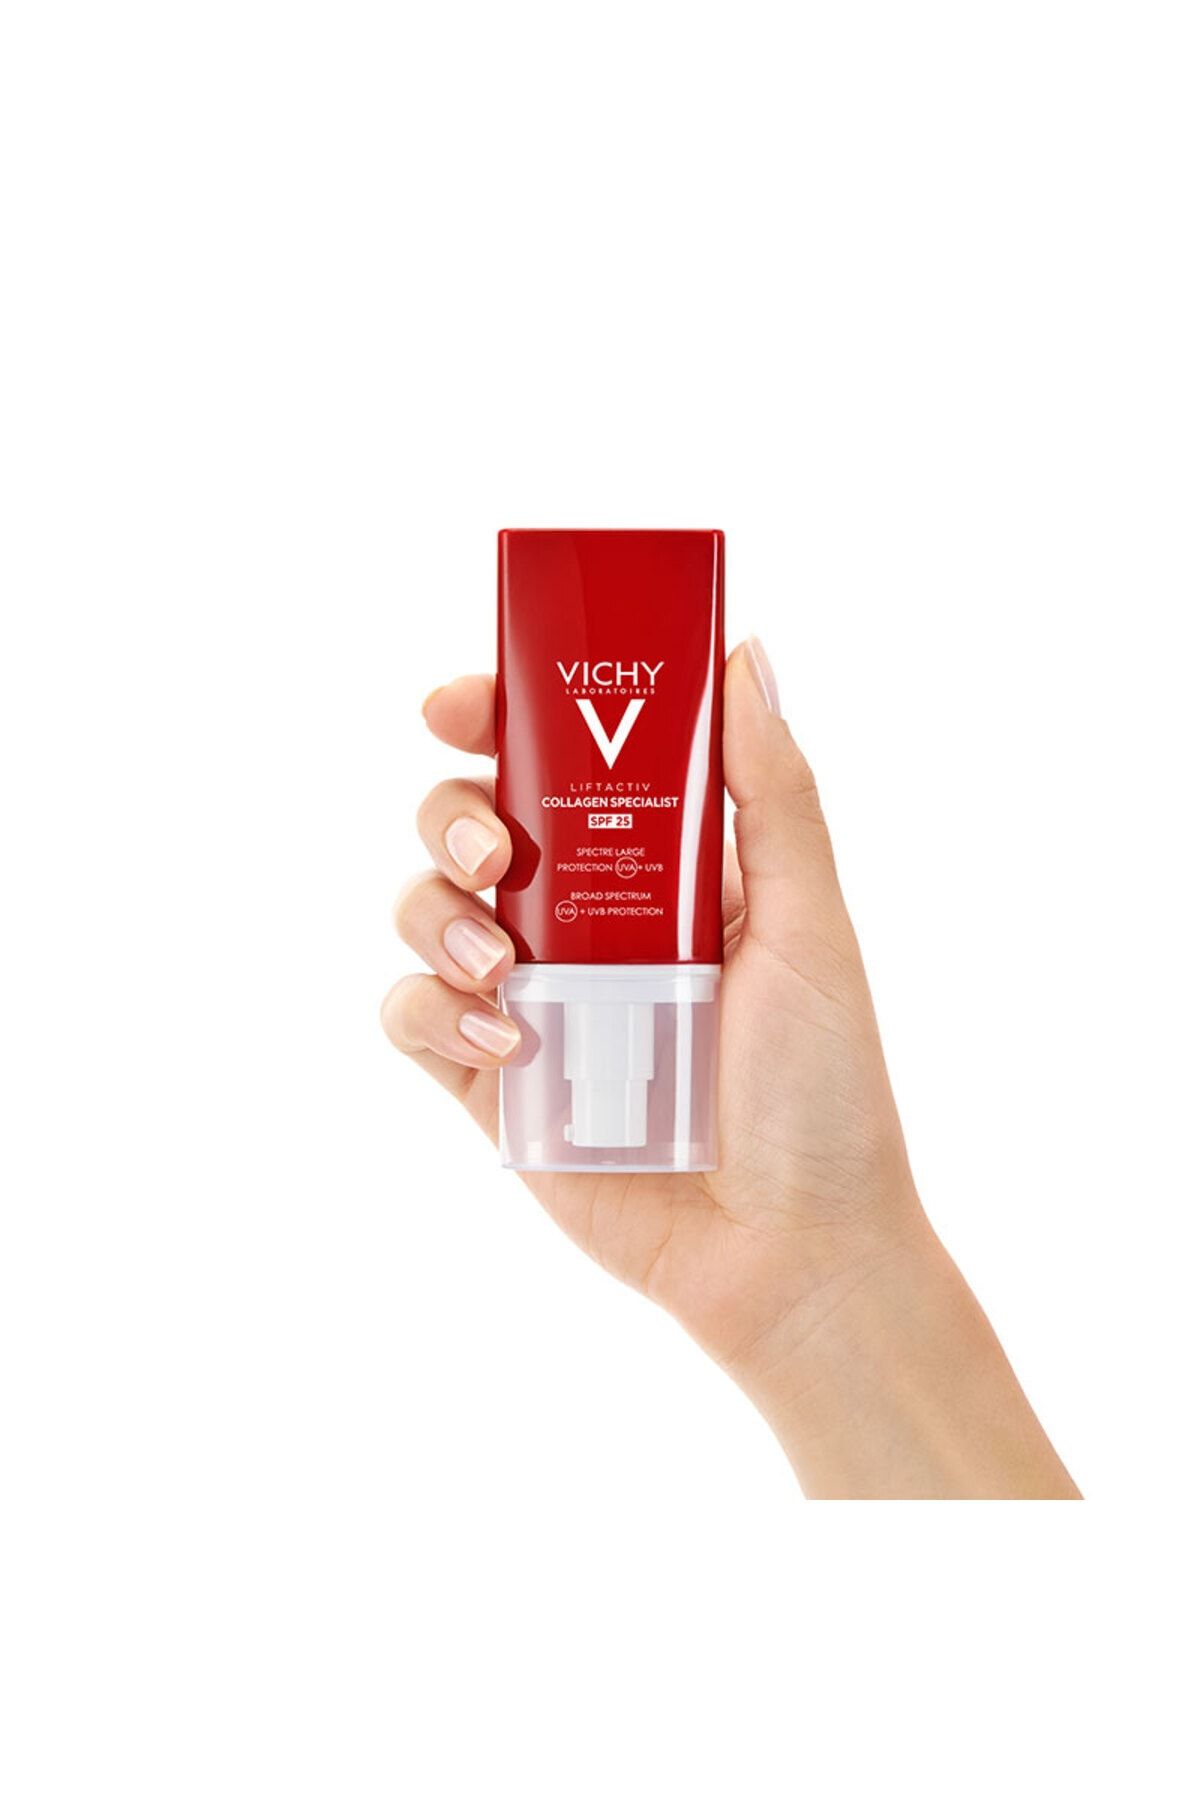 Vichy کرم مراقبتی کاهش دهنده لک و چروک با SPF 25 روشن کننده پوست 50 میل